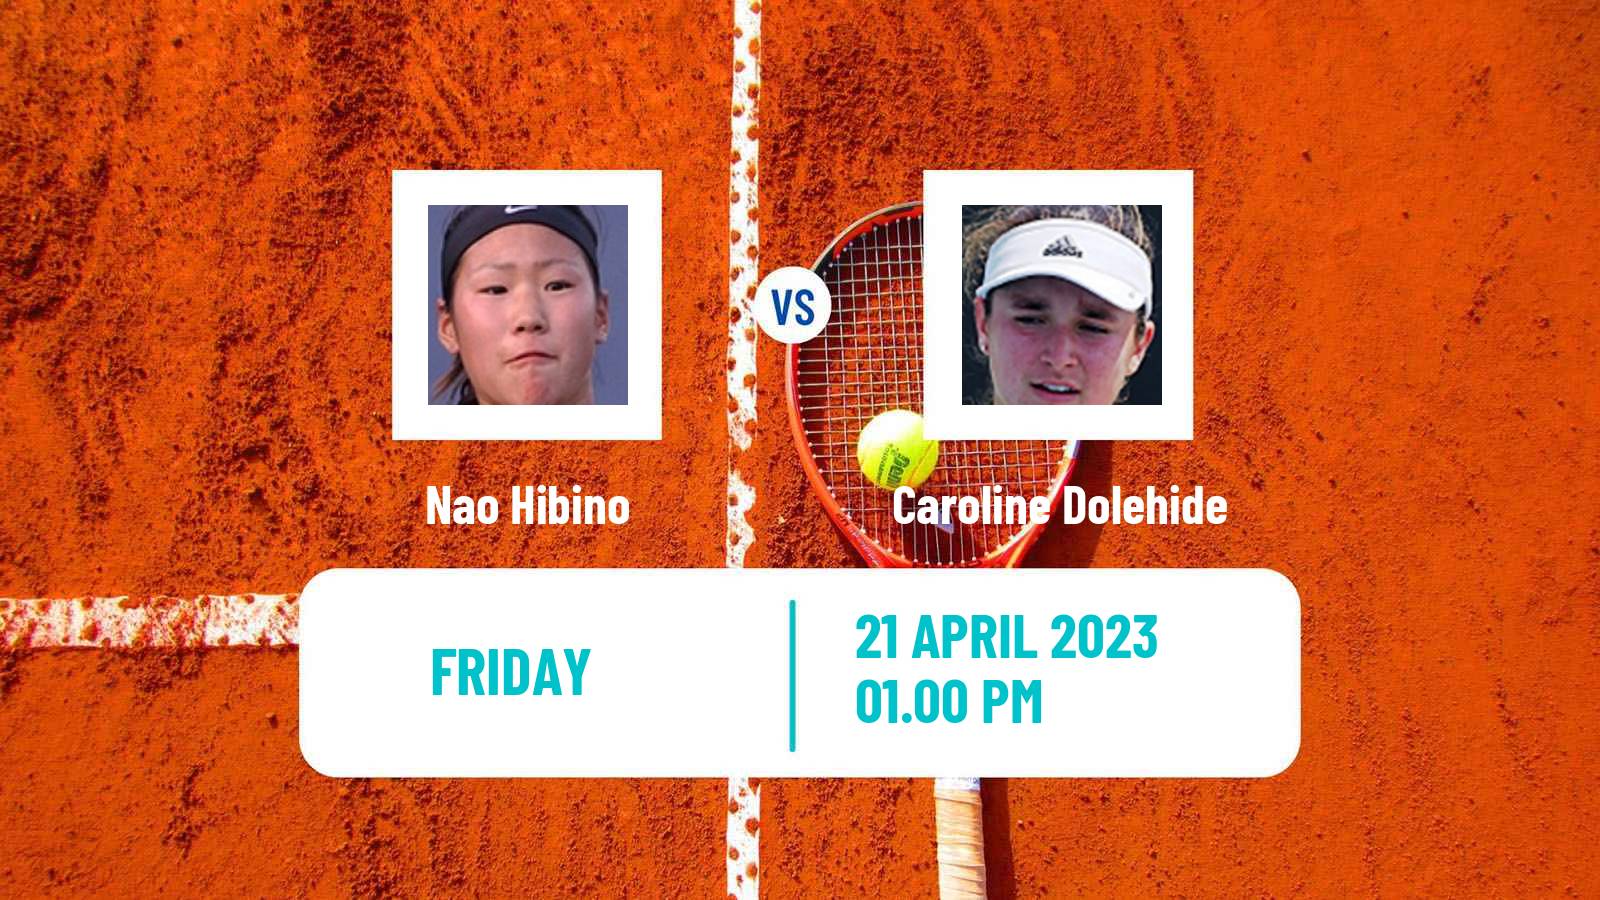 Tennis ITF Tournaments Nao Hibino - Caroline Dolehide